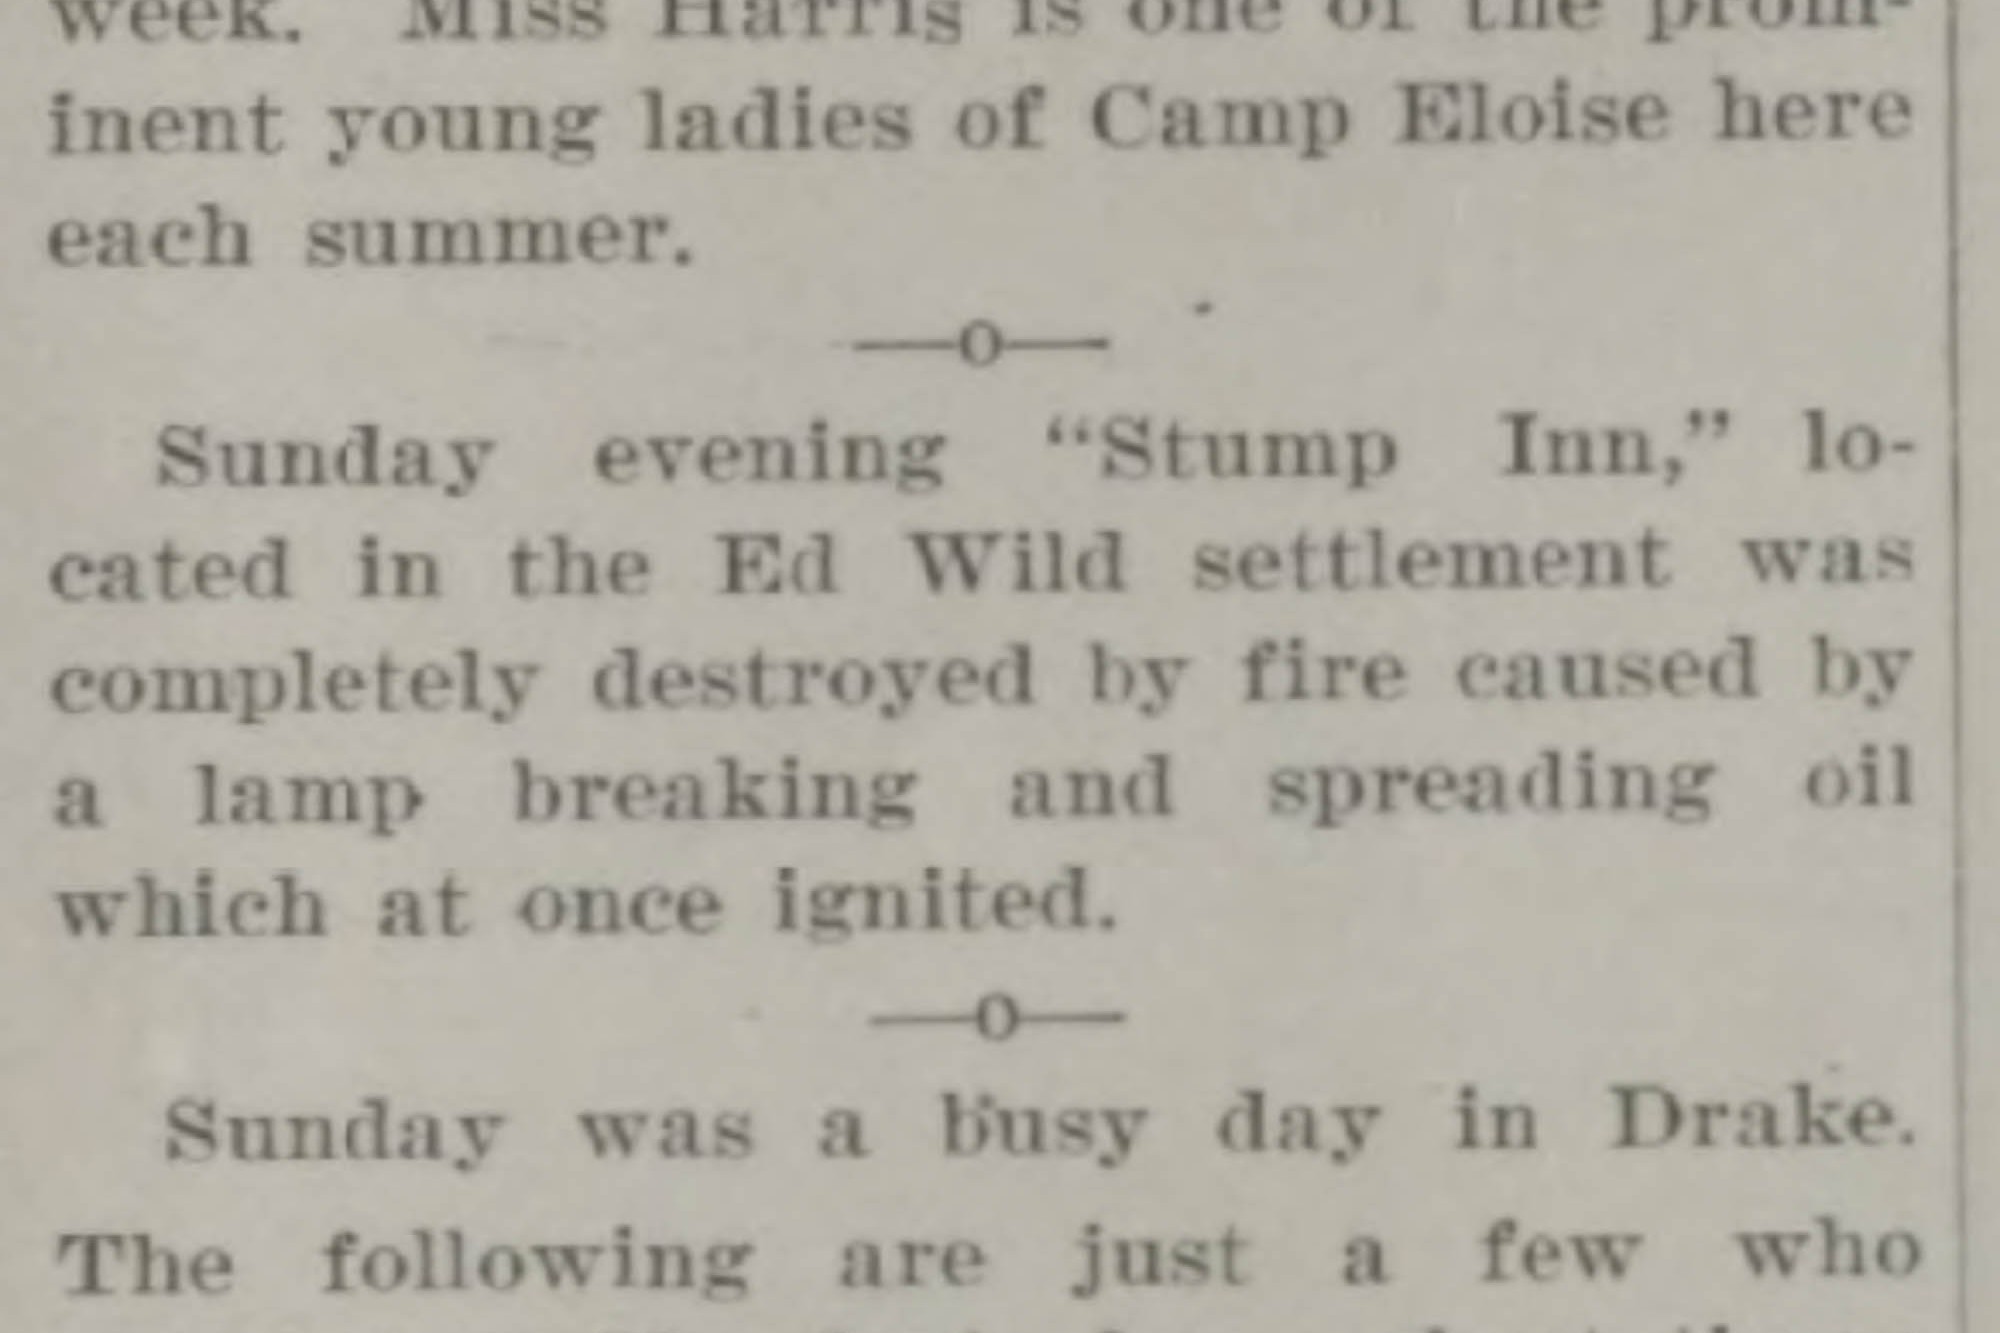 Idlewild Lodge - idlewildlodge.github.io - 1932-01-29 - The Estes Park Trail - Stump Inn Burns Down